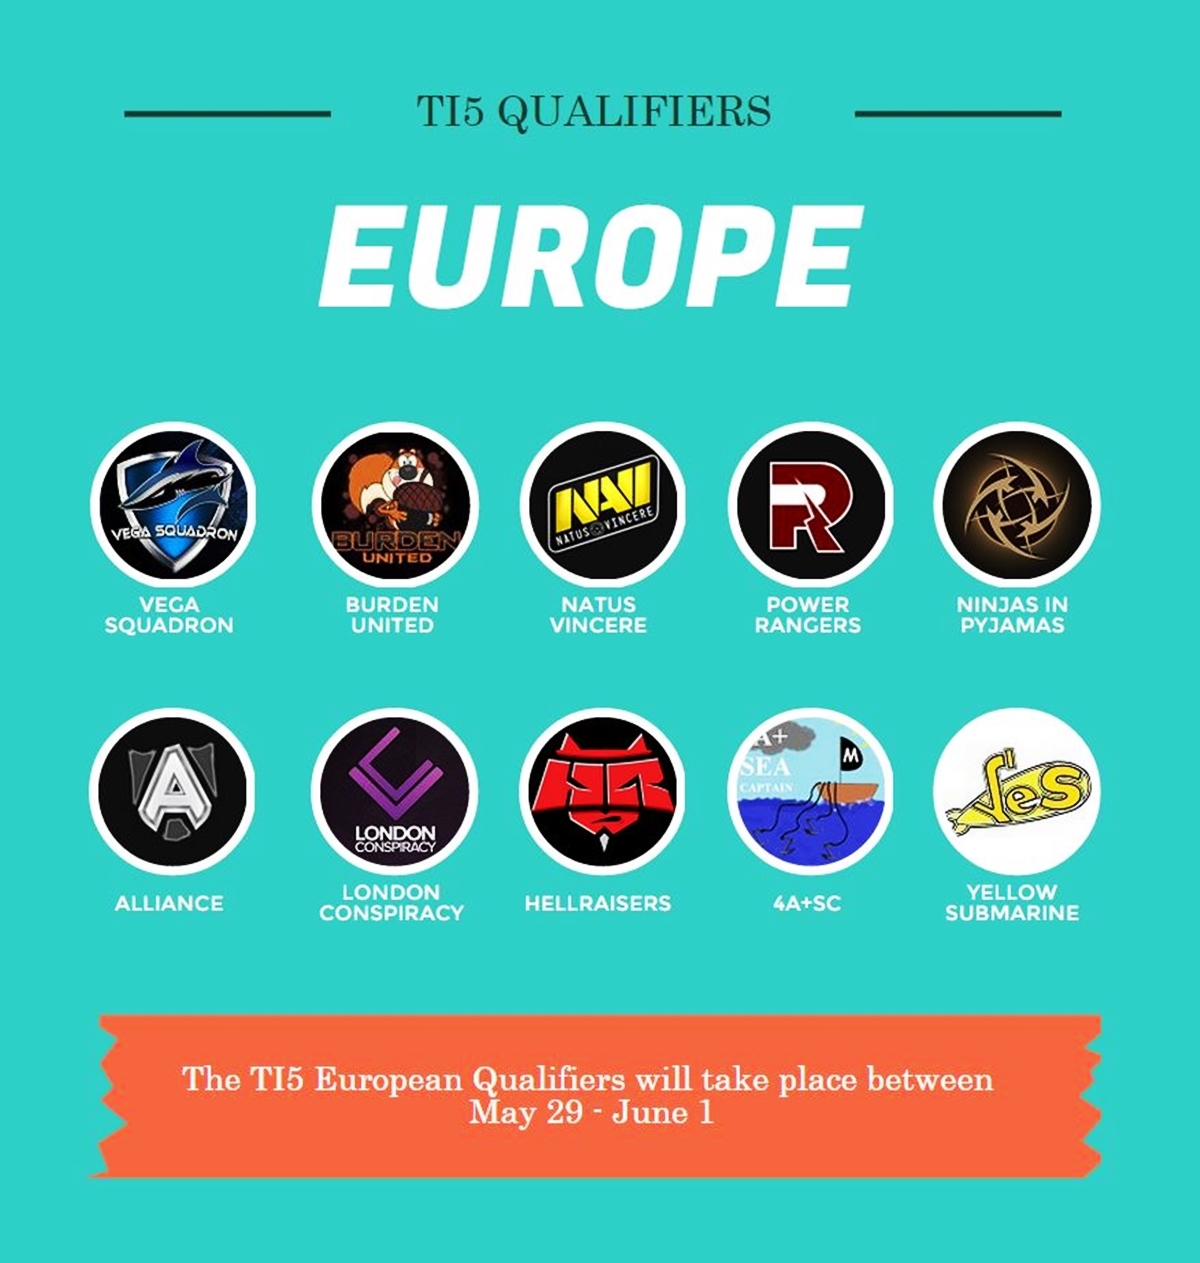 TI5 European Qualifiers